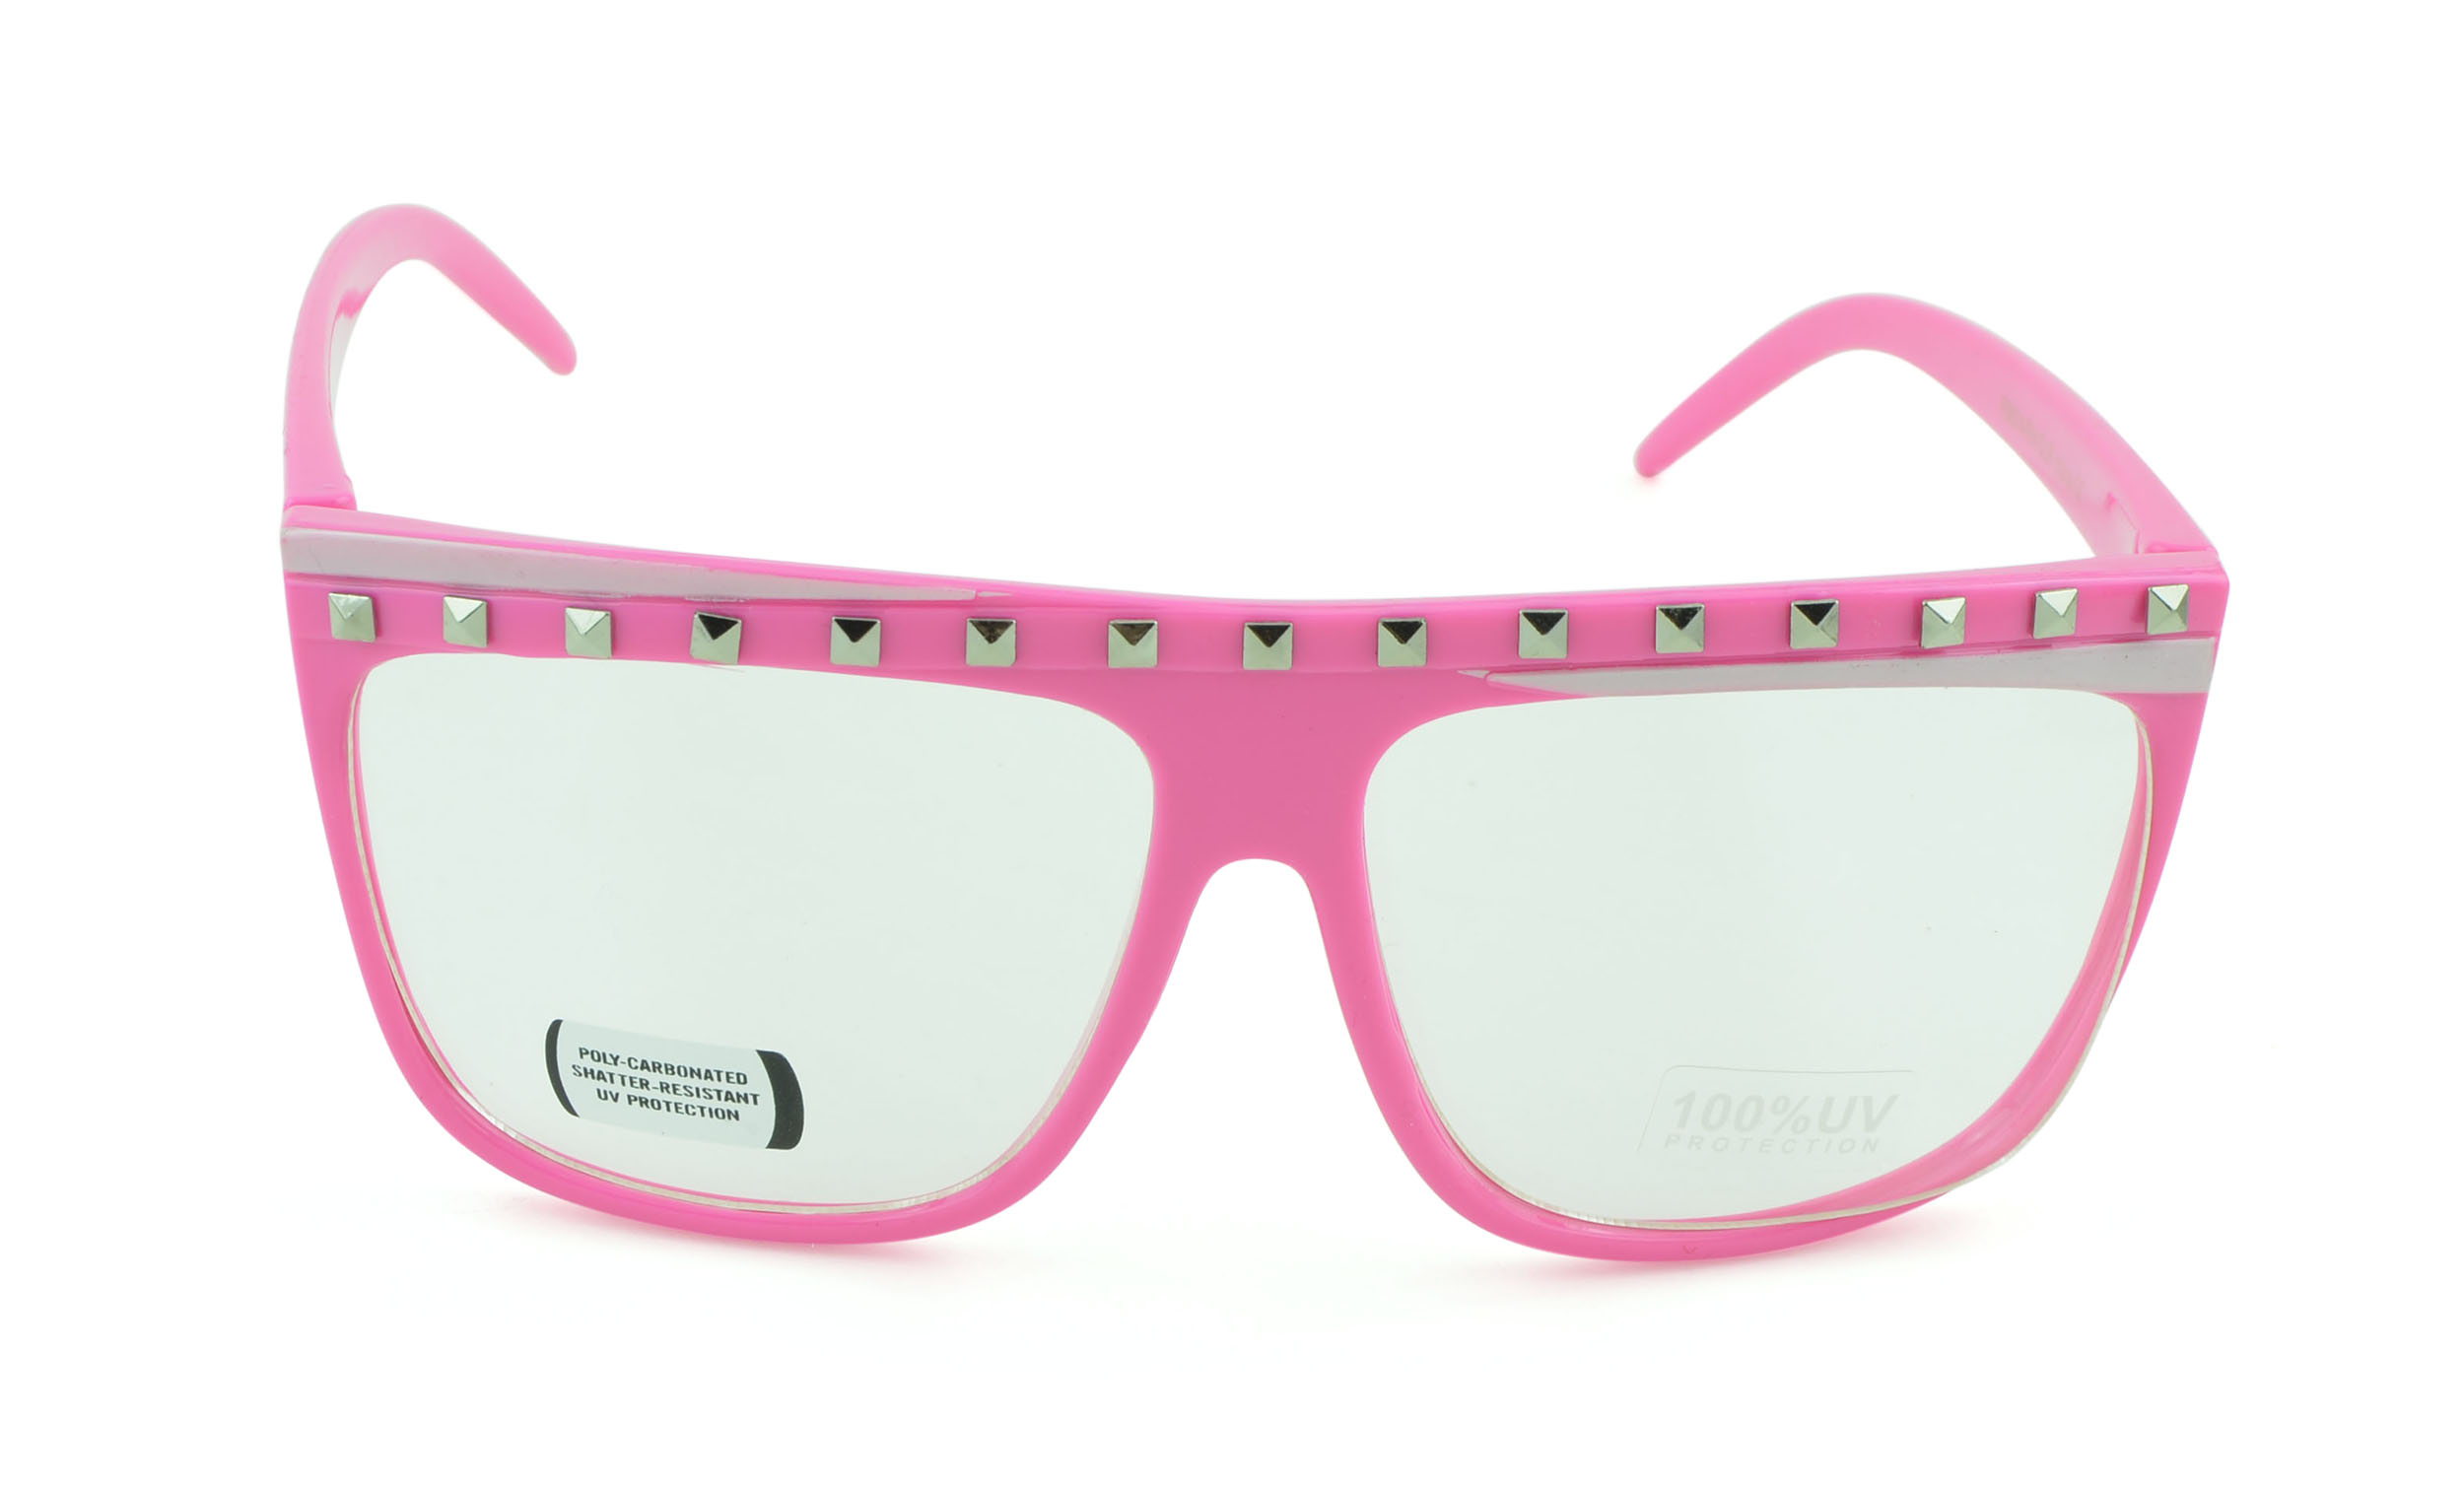 Belle Donne-Unisex Trendy Fun Colorful Fashion Party Sunglasses - Pink